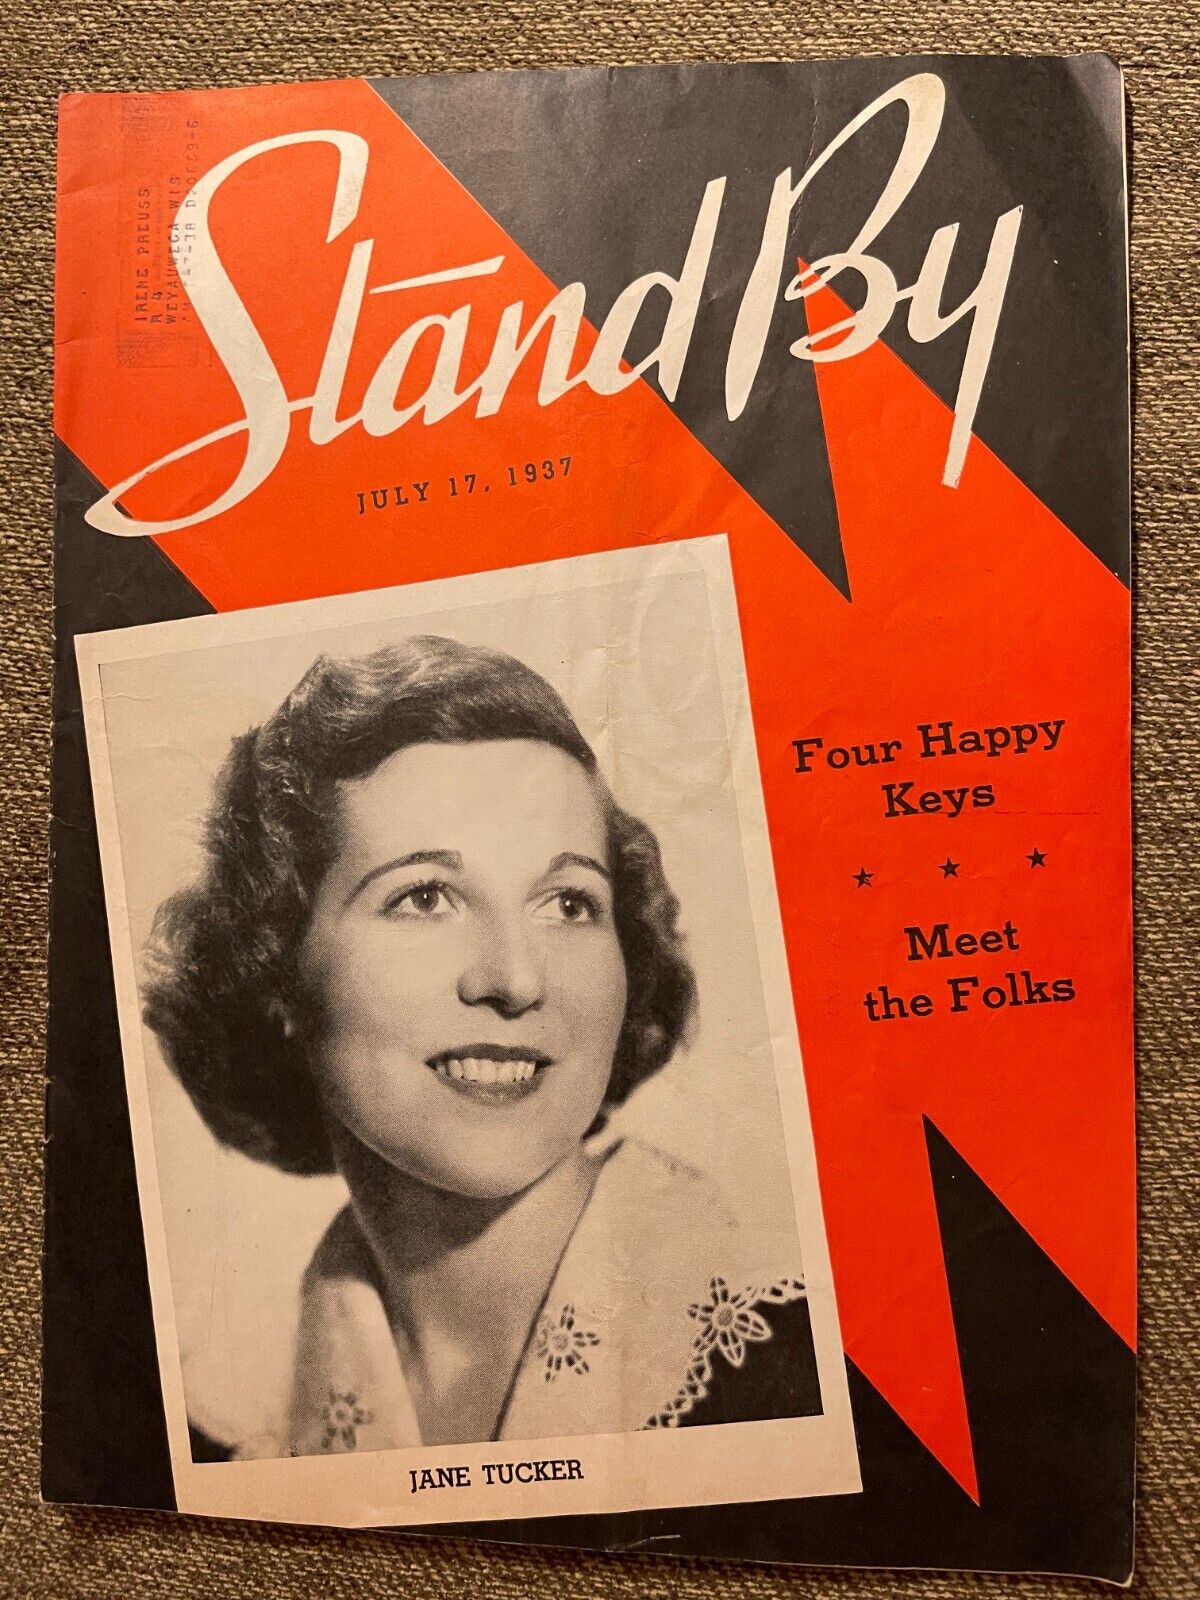 Jane Tucker - Wls Stand By Magazine - Prairie Farmer Station 7-17-1937